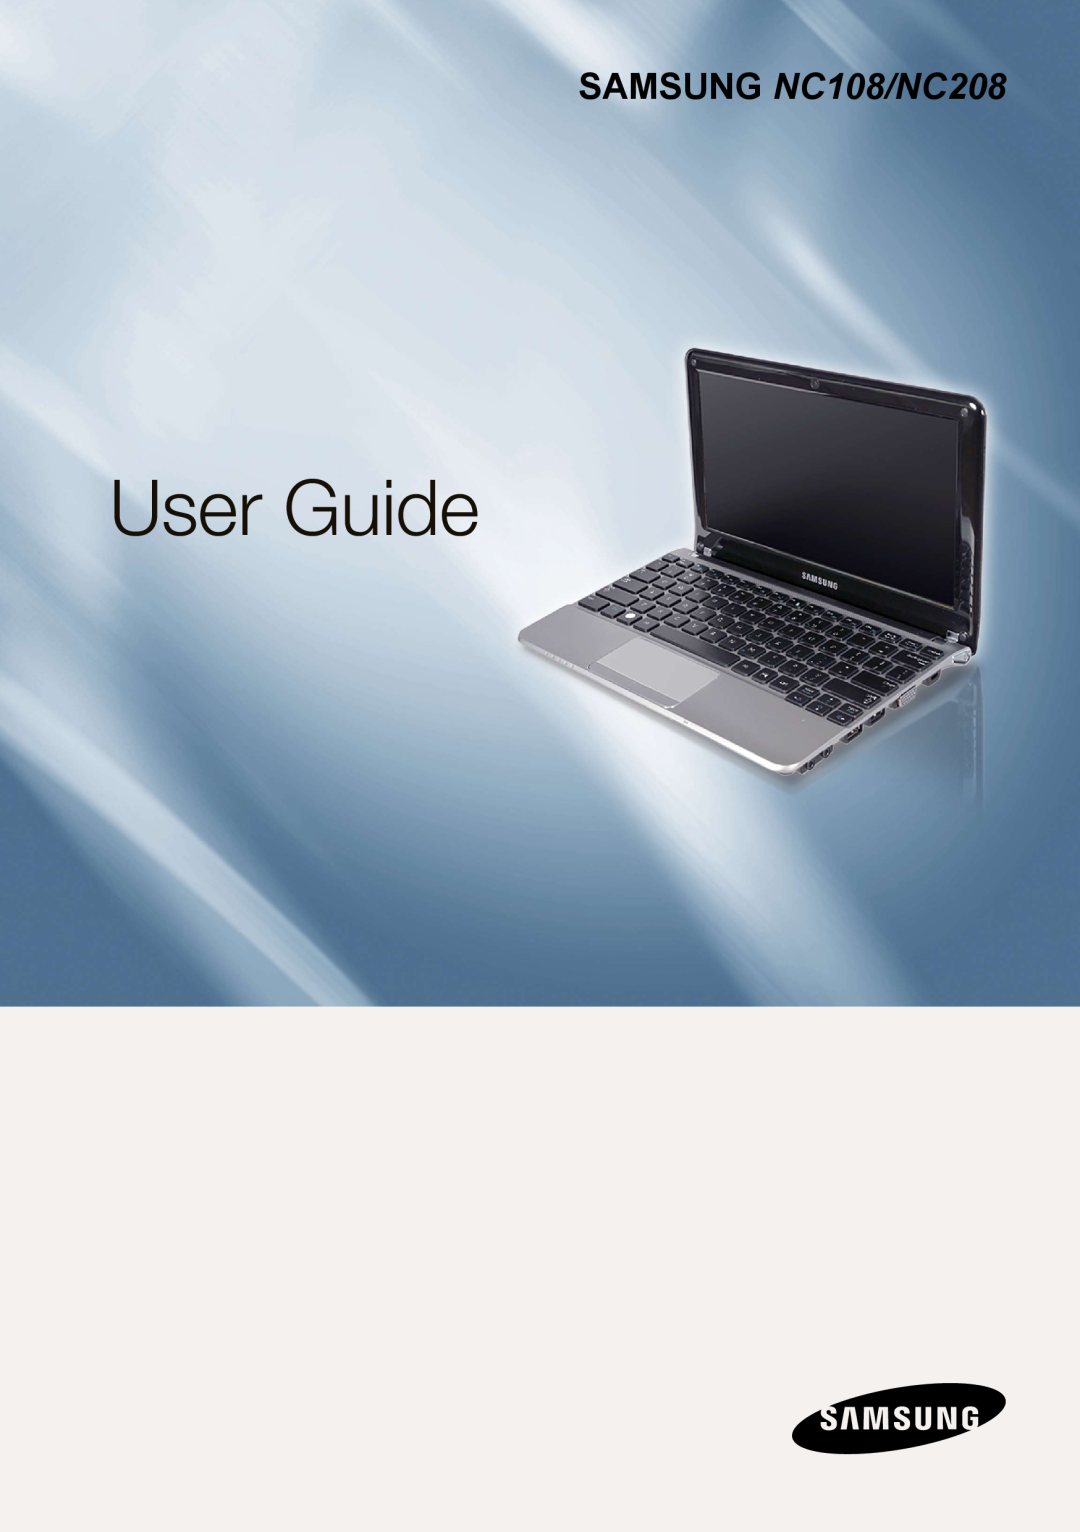 Samsung NP-RV408-A01VN, NP-RV408-A01UA, NP-RV408-A01RU manual User Guide, SAMSUNG NC108/NC208 